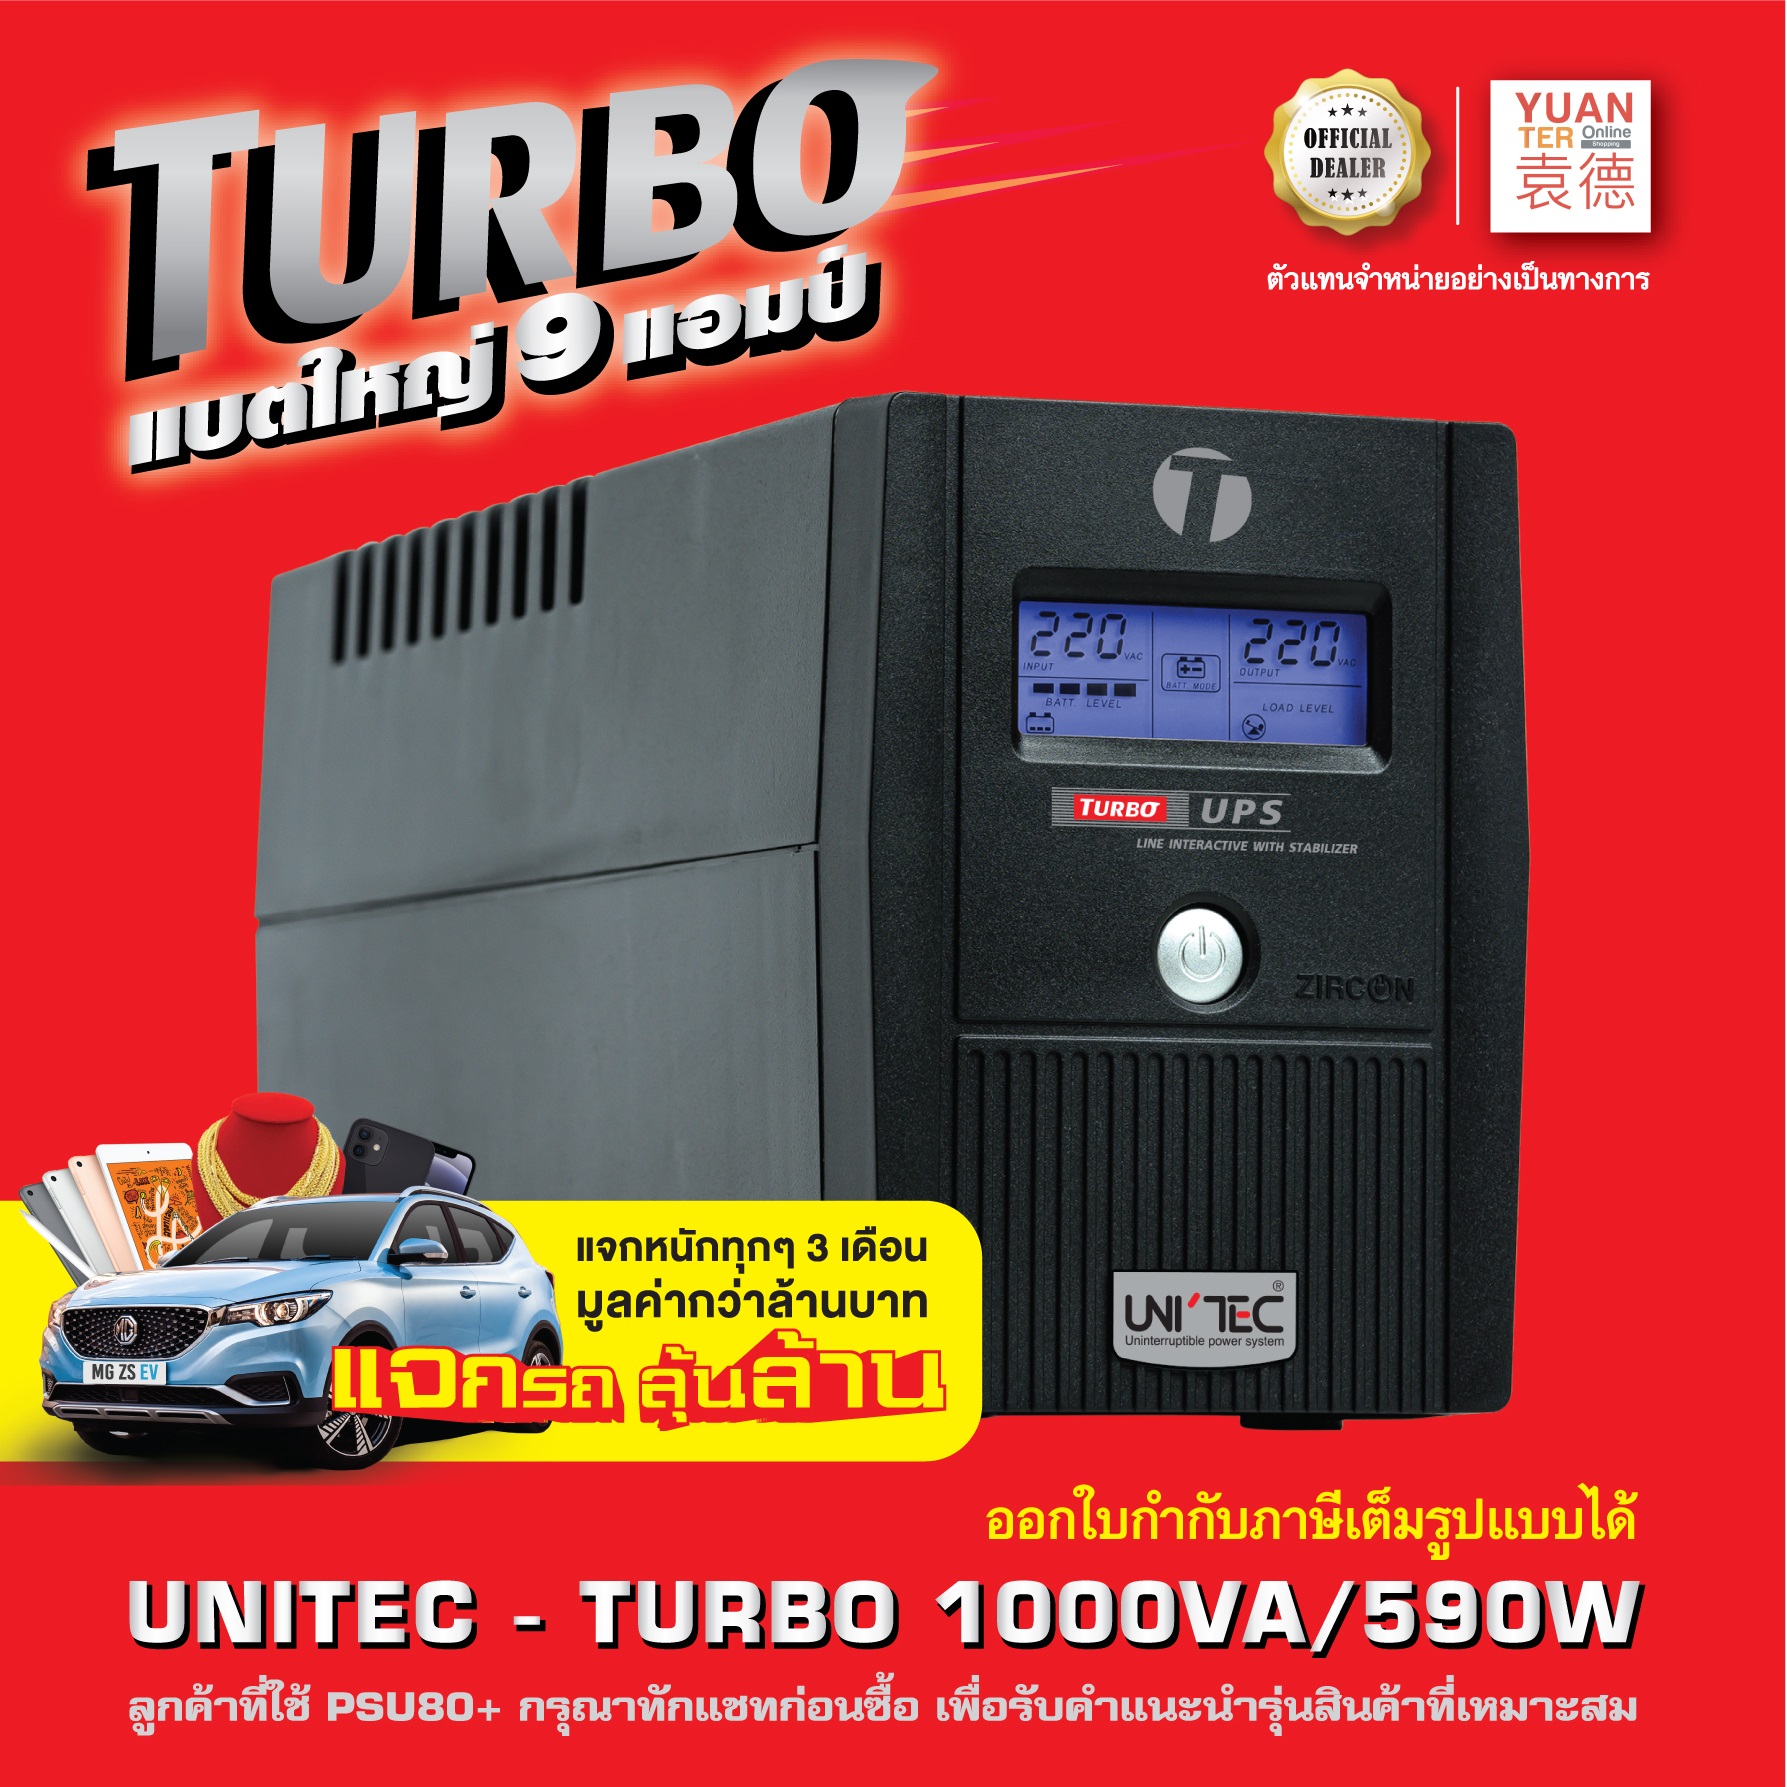 Turbo-1000va/590w Unitec รุ่นใหม่ วัตต์สูง แบตใหญ่ 9 แอมป์ สำรองไฟนาน มีหน้าจอดิจิทัล มีซอร์ฟแวร์ ประกัน 2 ปี [zirconแจกรถลุ้นล้าน]. 